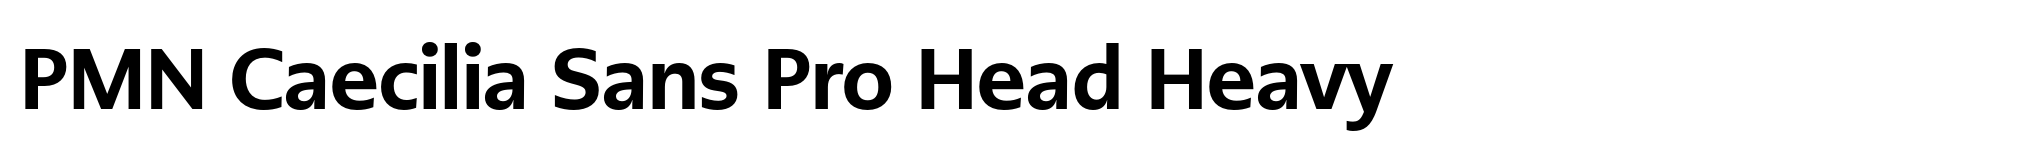 PMN Caecilia Sans Pro Head Heavy image